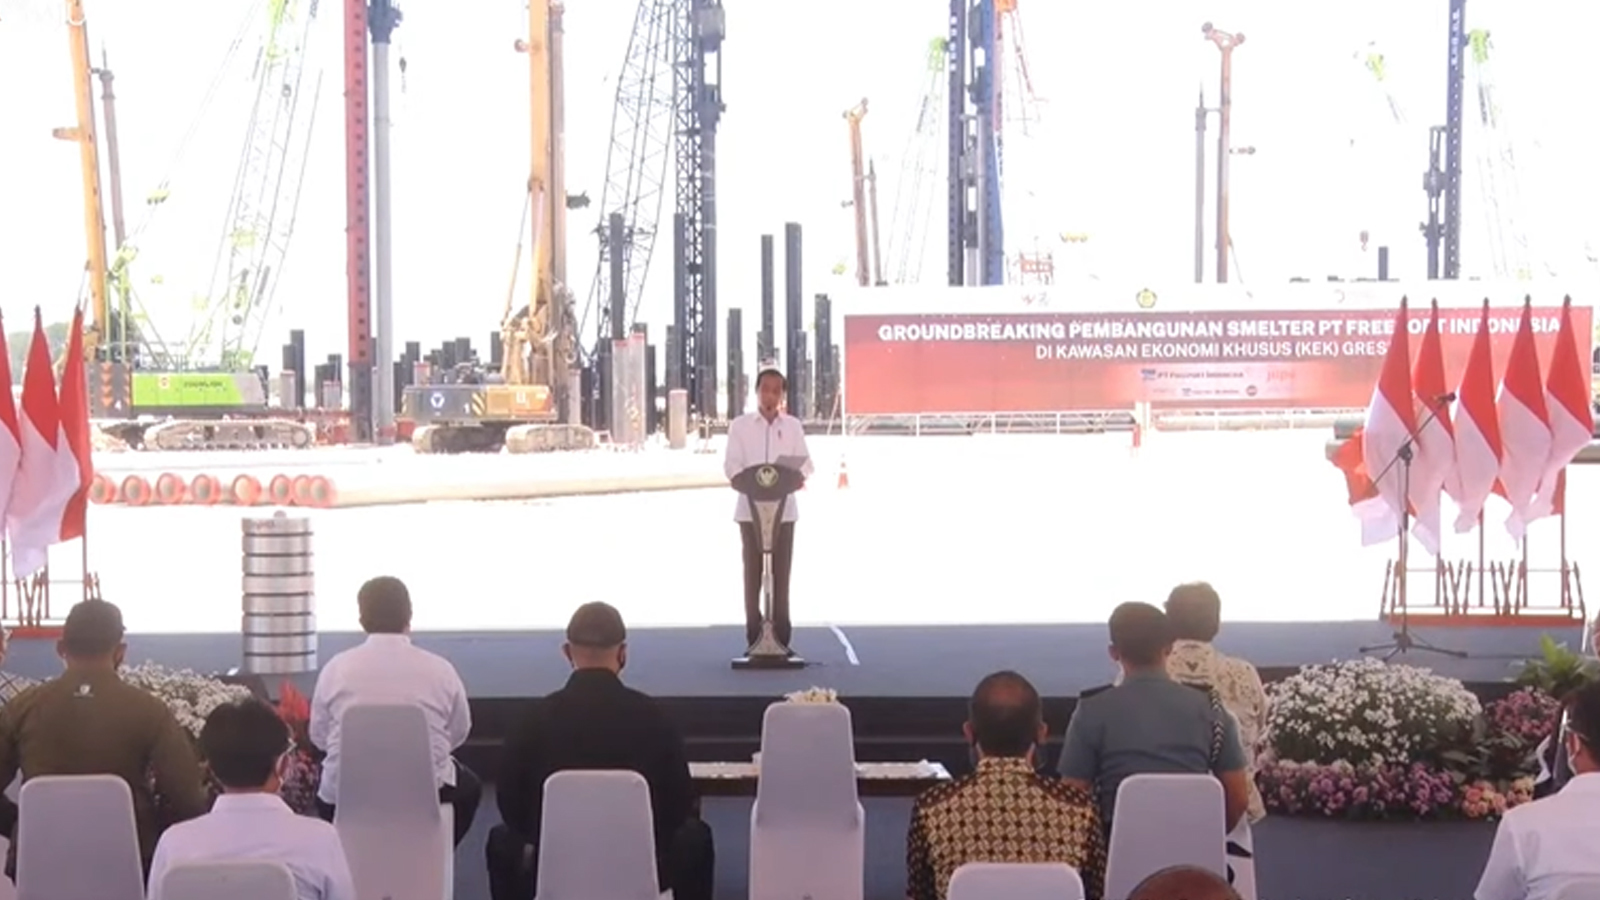 Pembangunan Smelter PT Freeport Indonesia